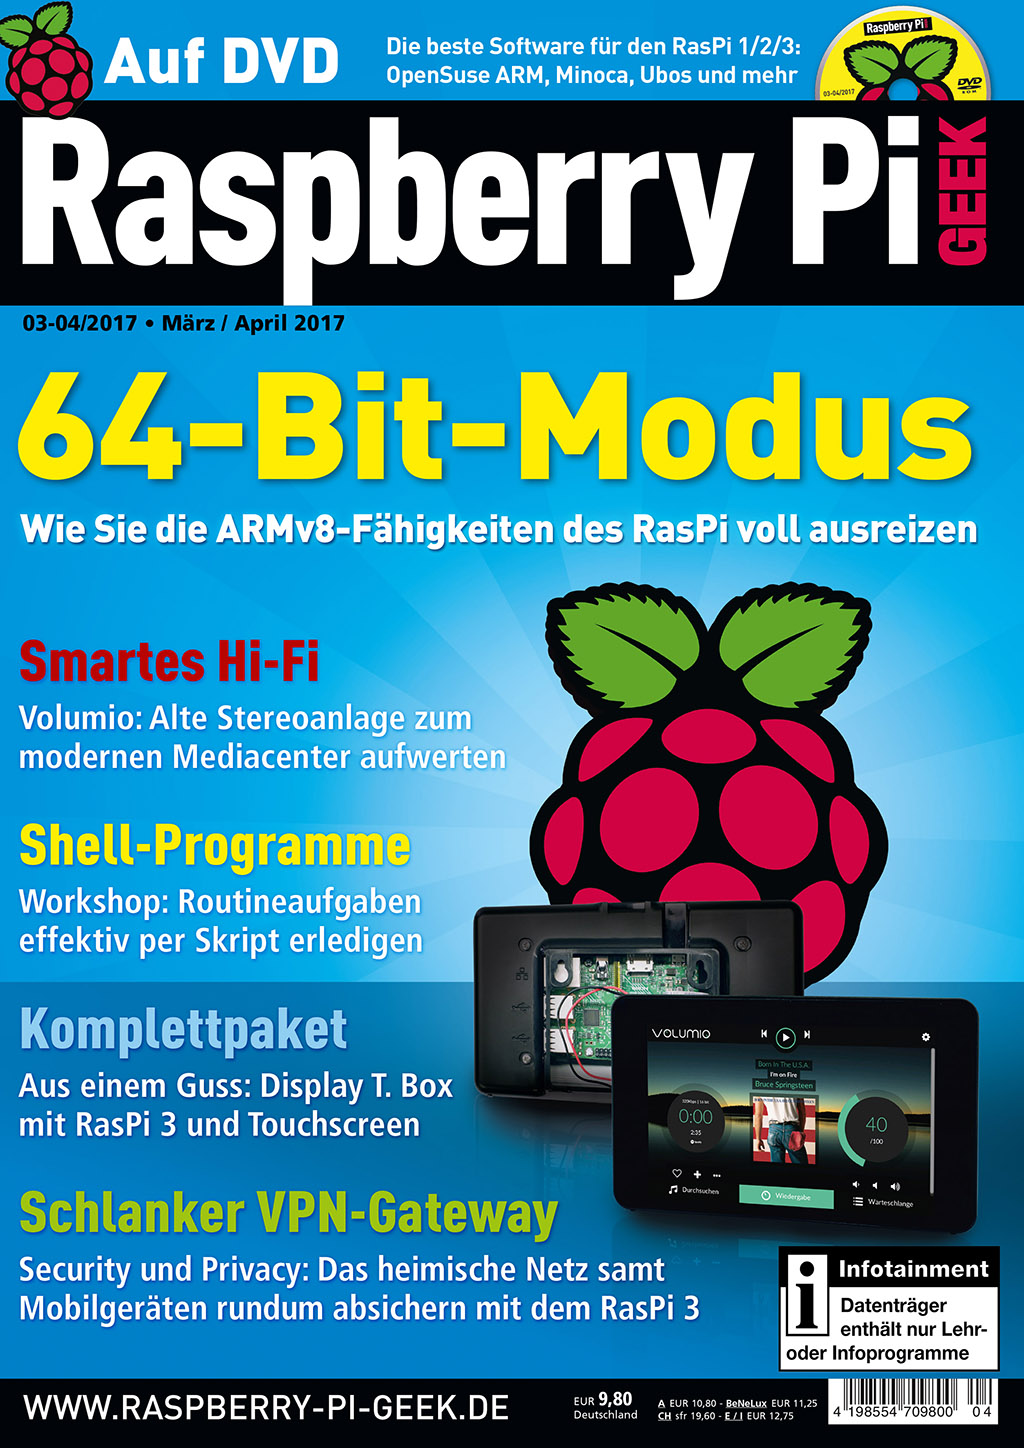 Raspberry Pi Geek ePaper 03-04/2017